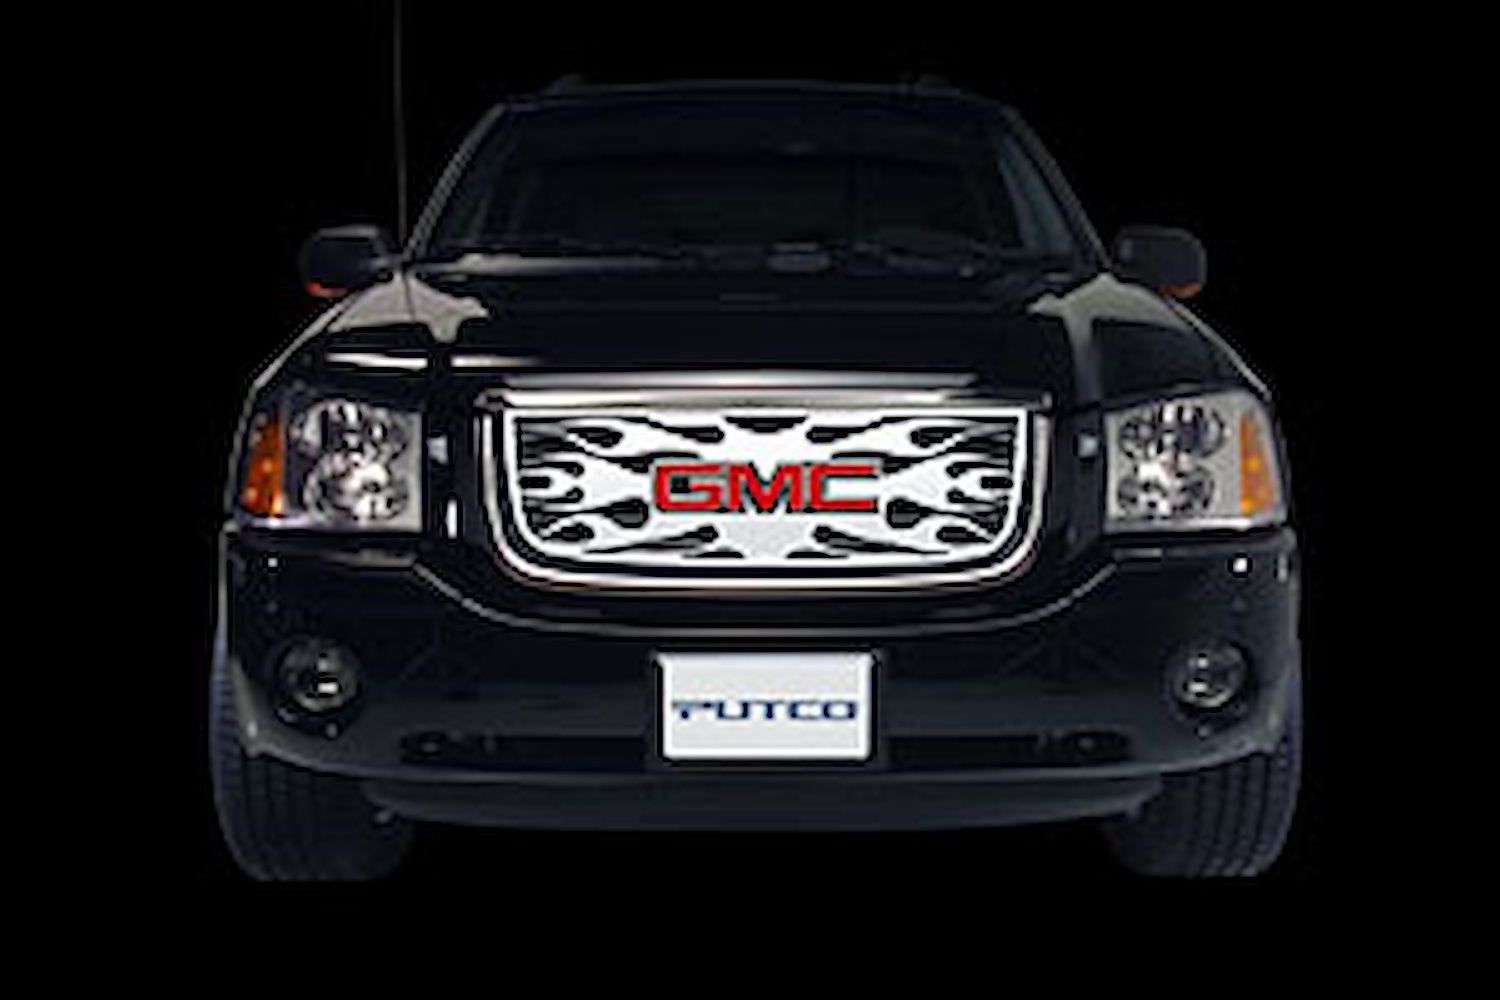 GMC Envoy w/ logo cutout